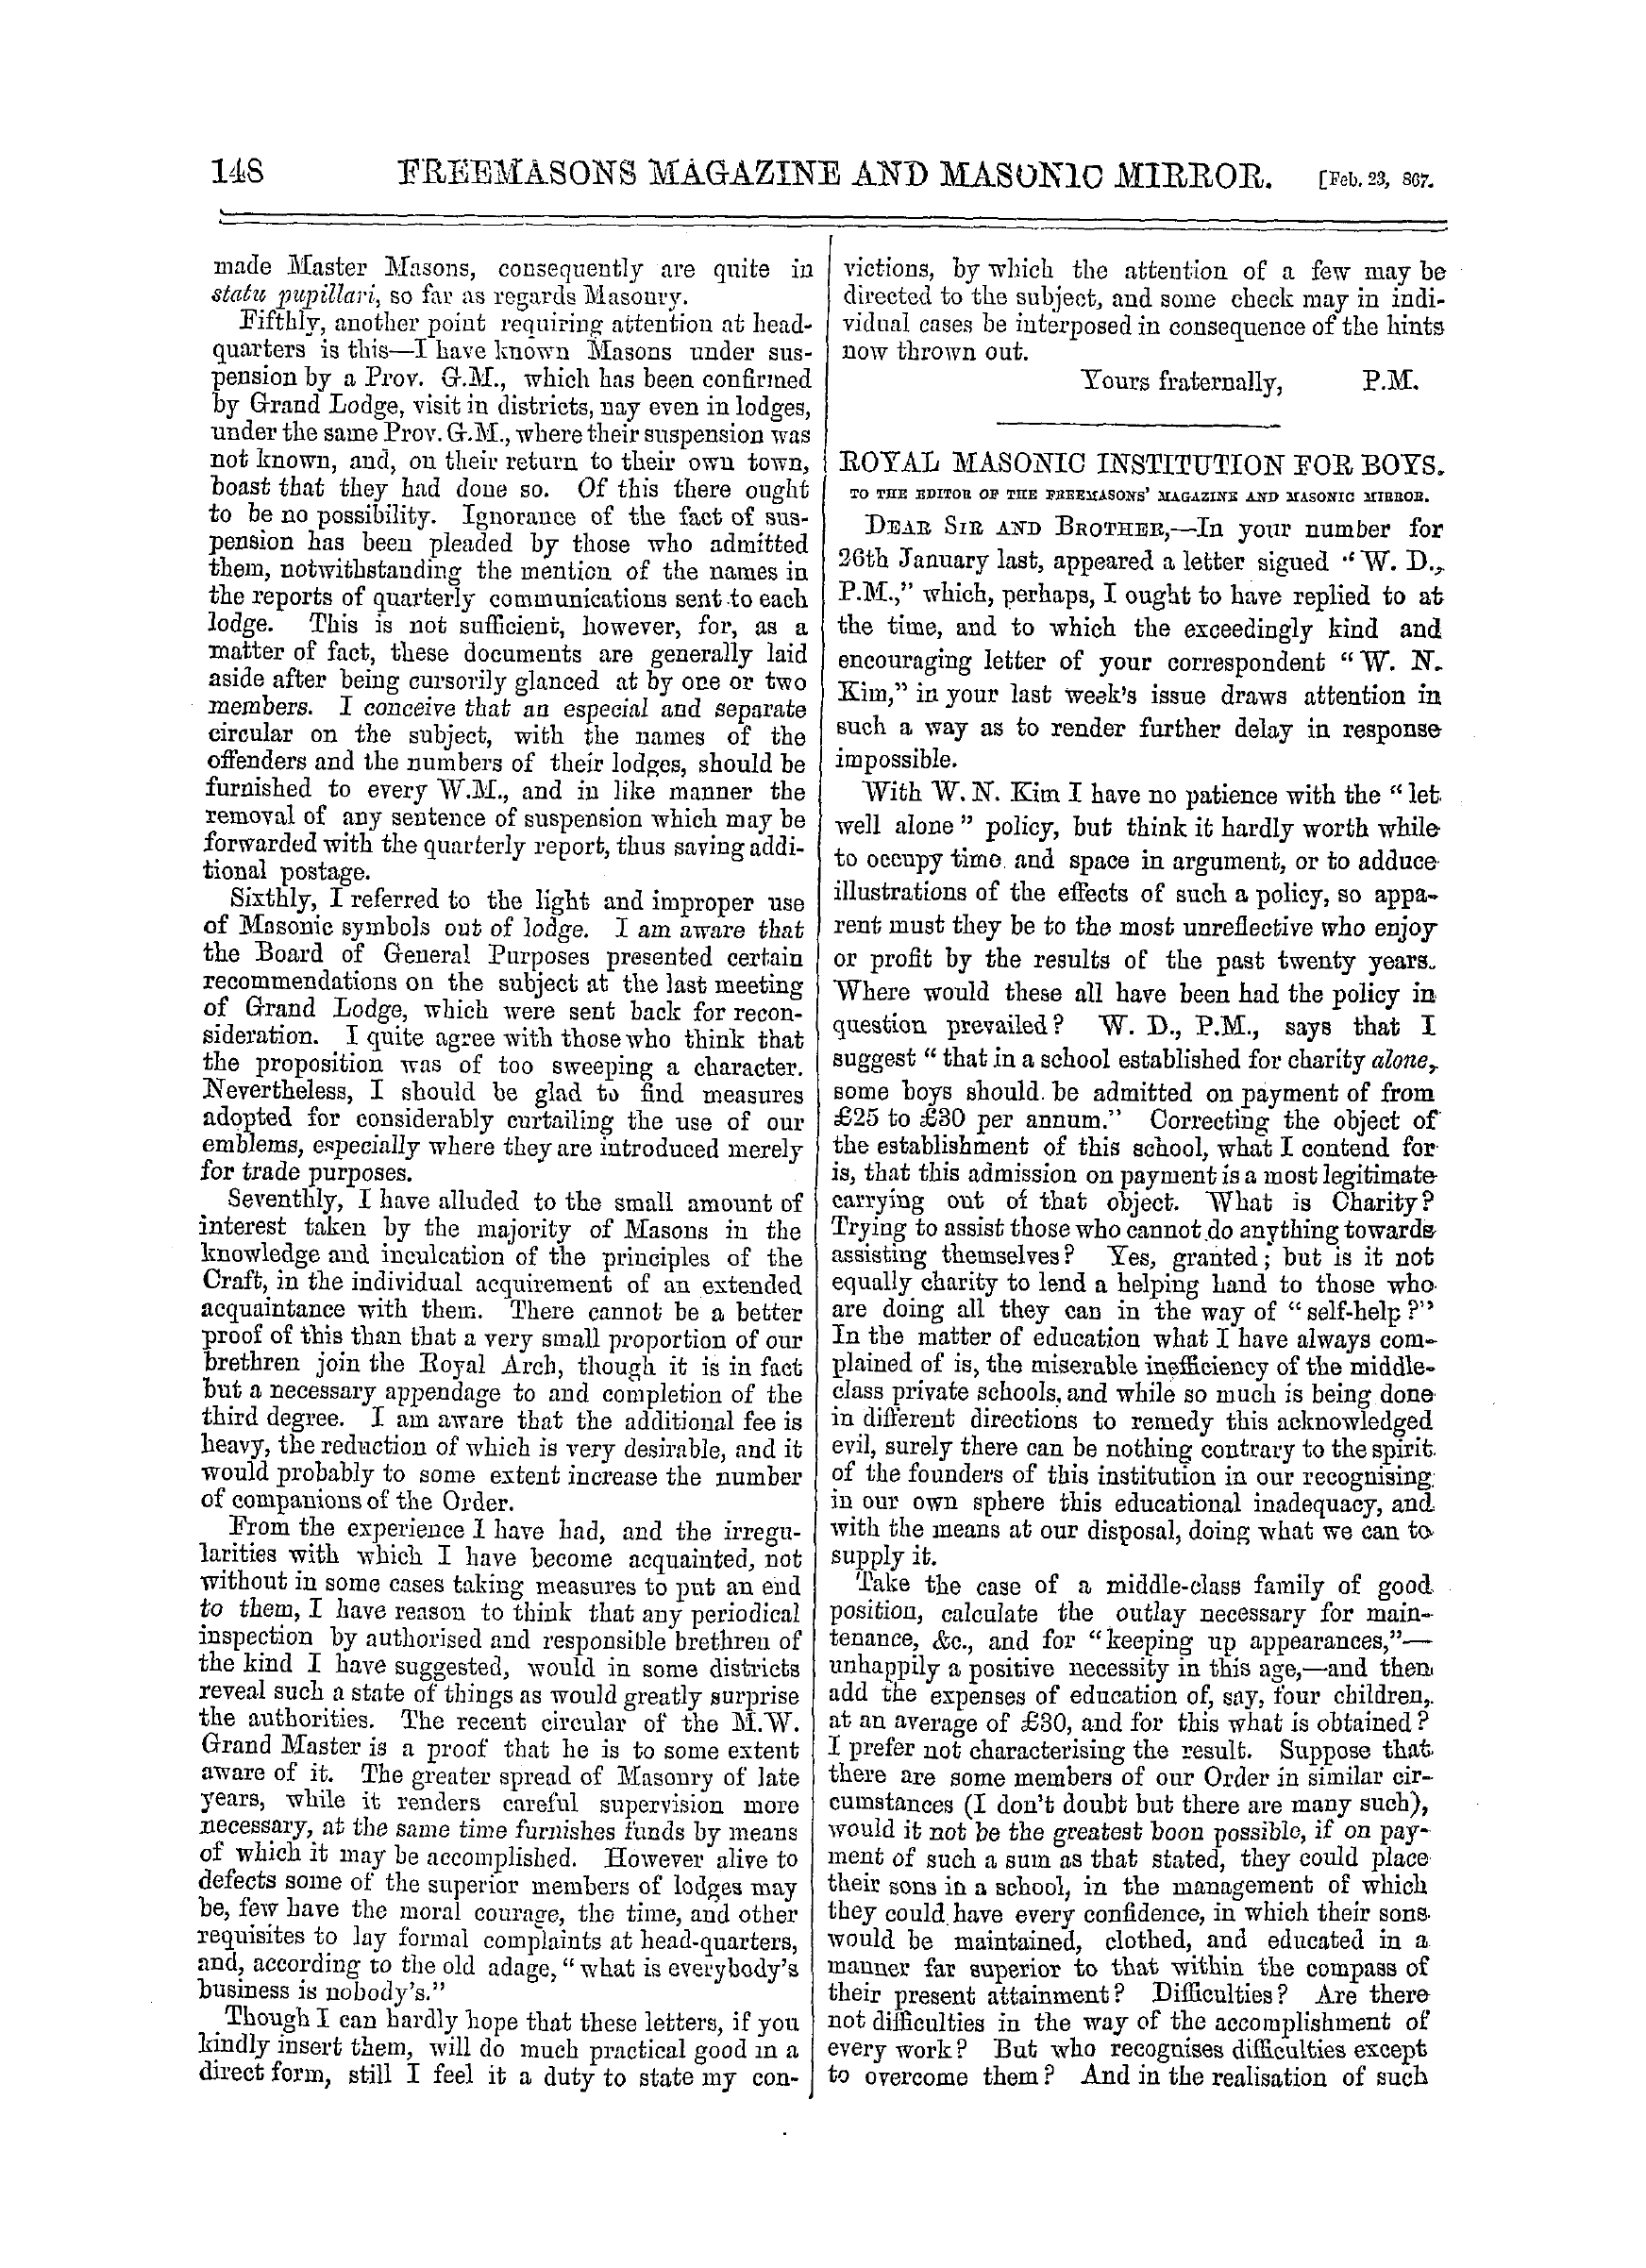 The Freemasons' Monthly Magazine: 1867-02-23 - Correspondence.